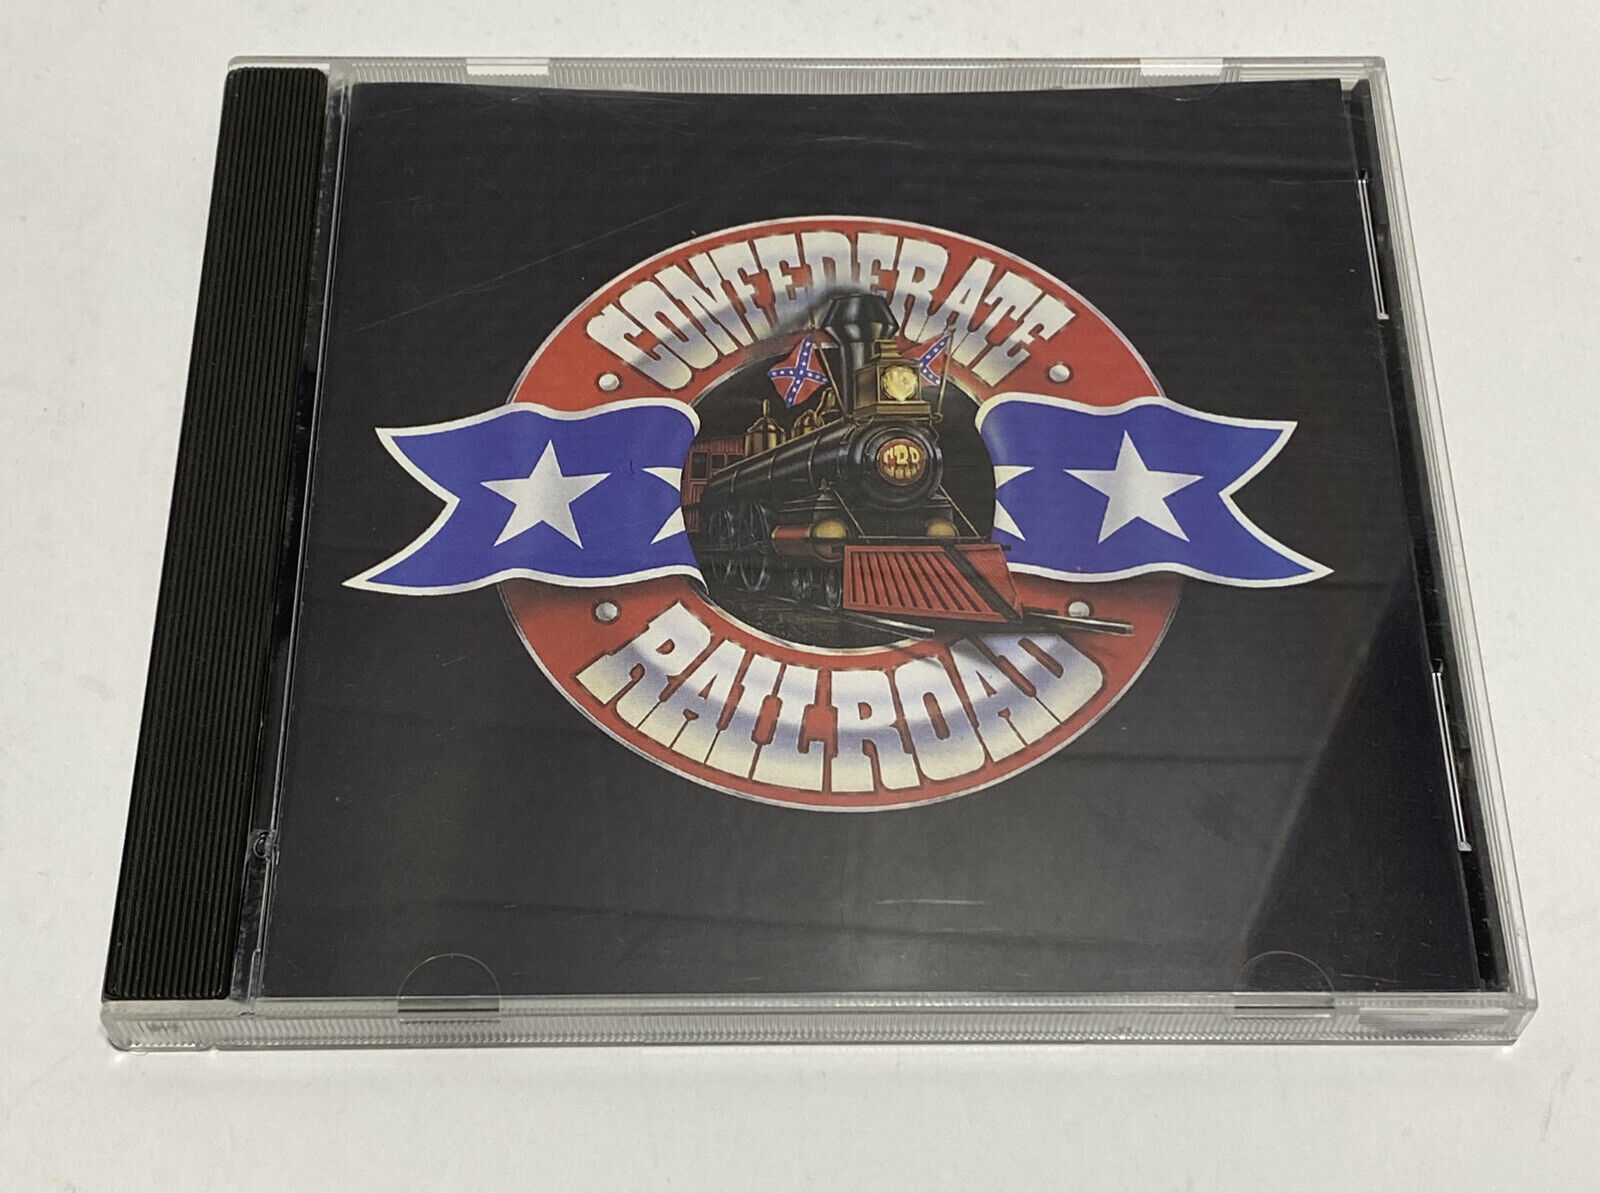 Confederate Railroad Self-Titled CD Album 1992 Atlantic Records Southern Rock